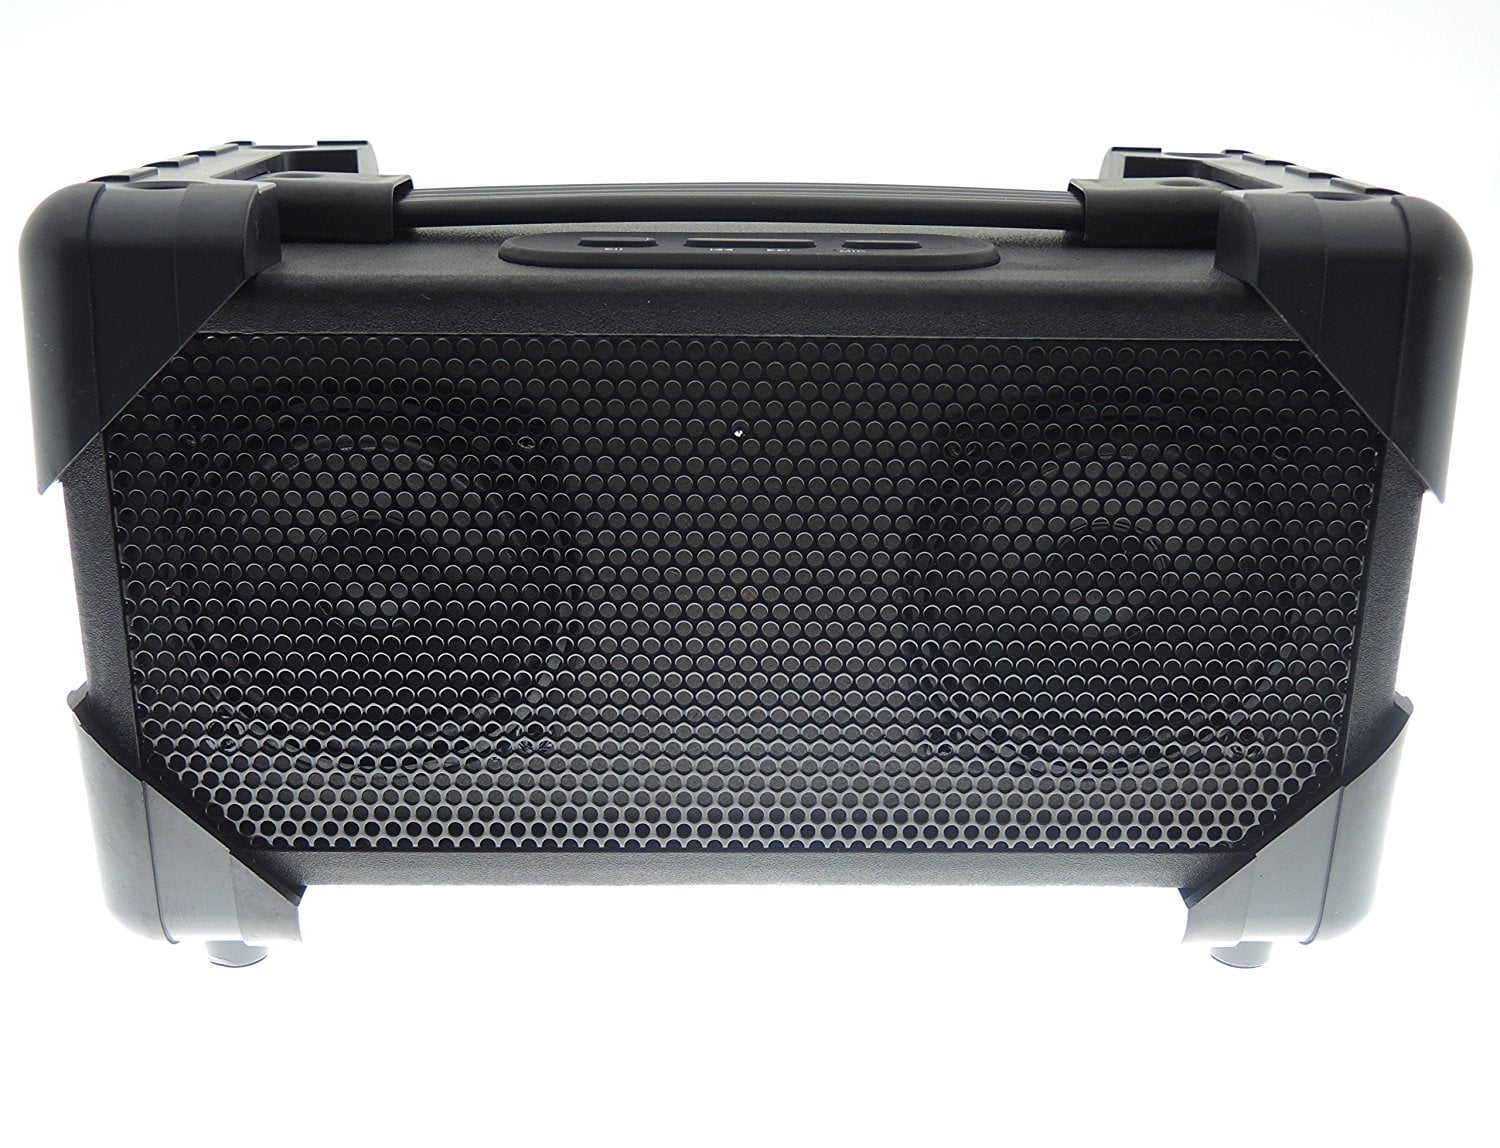 vivitar retro bluetooth speaker